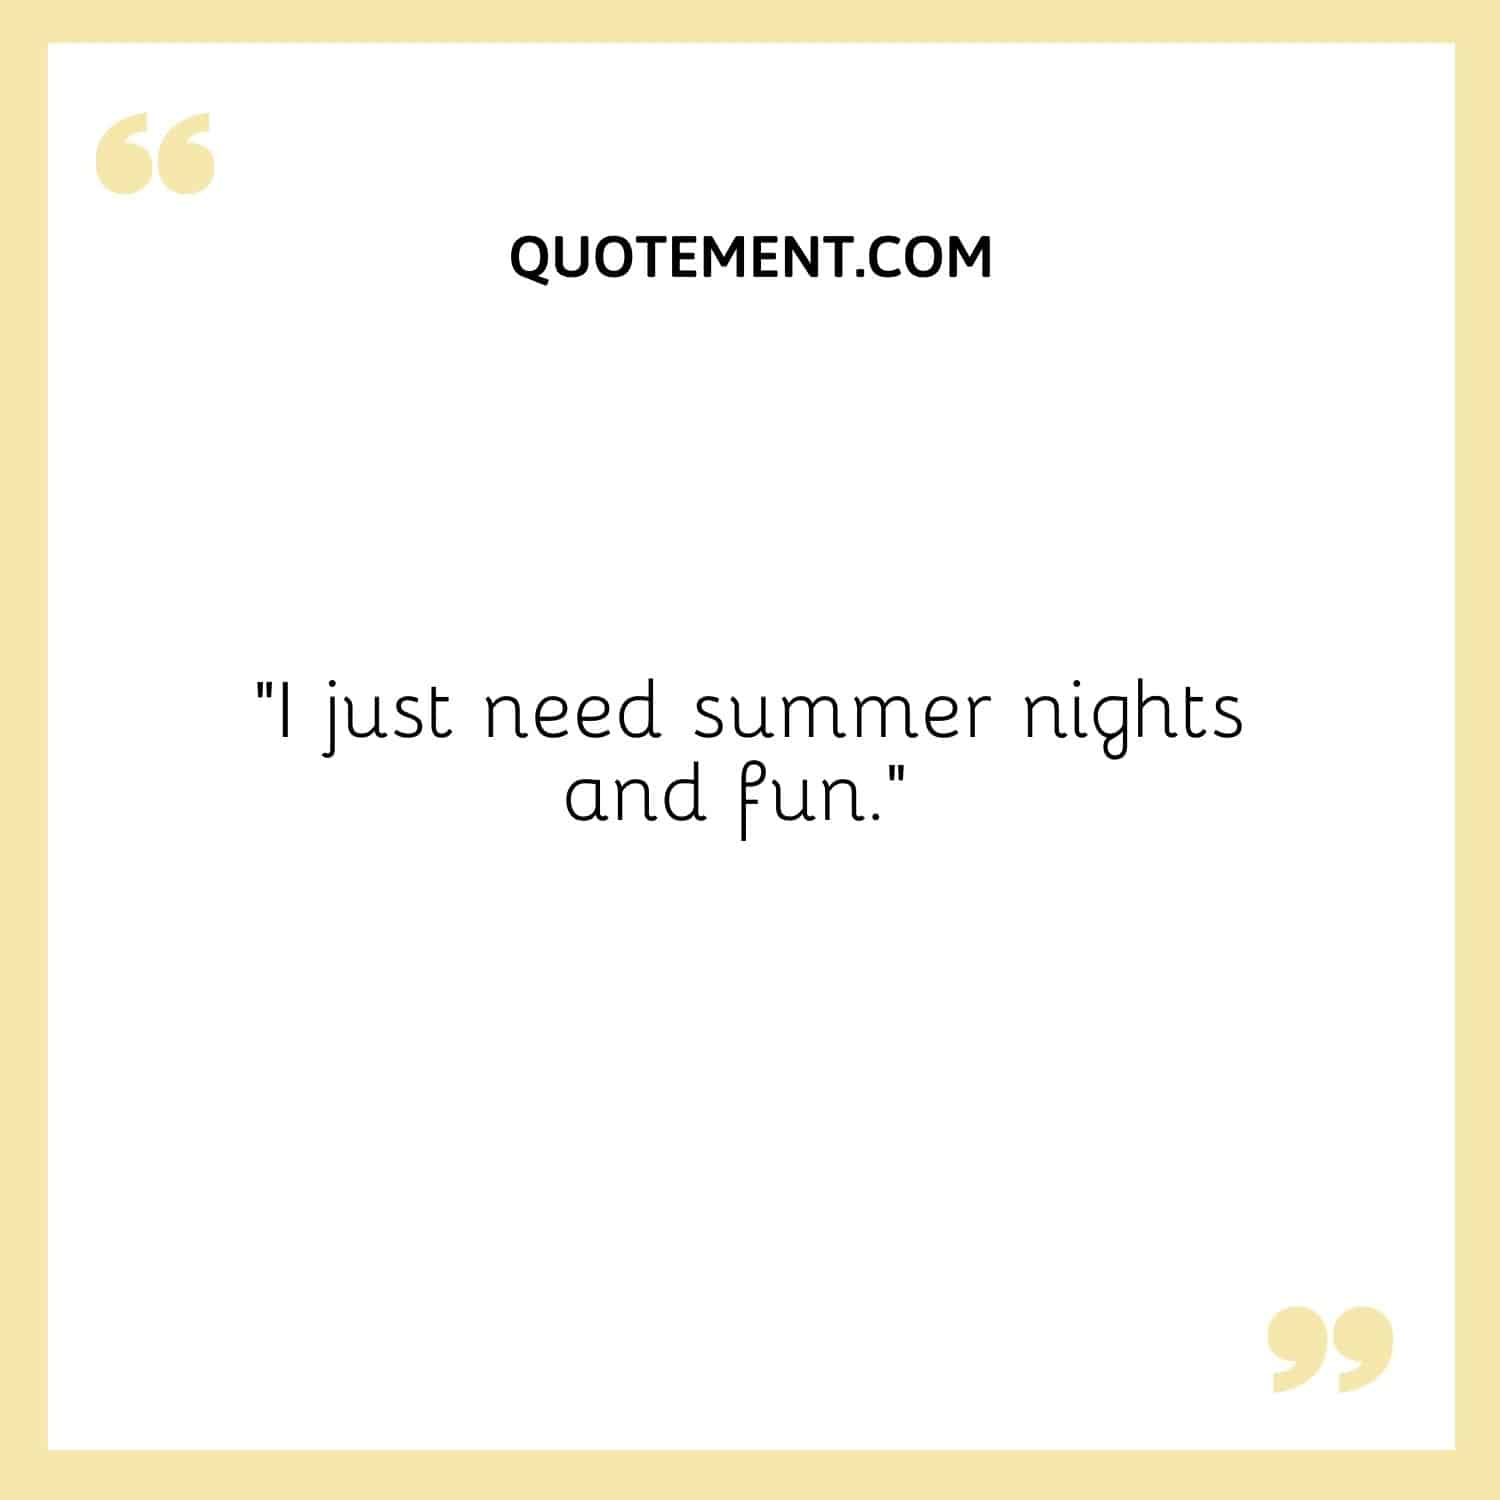 I just need summer nights and fun.